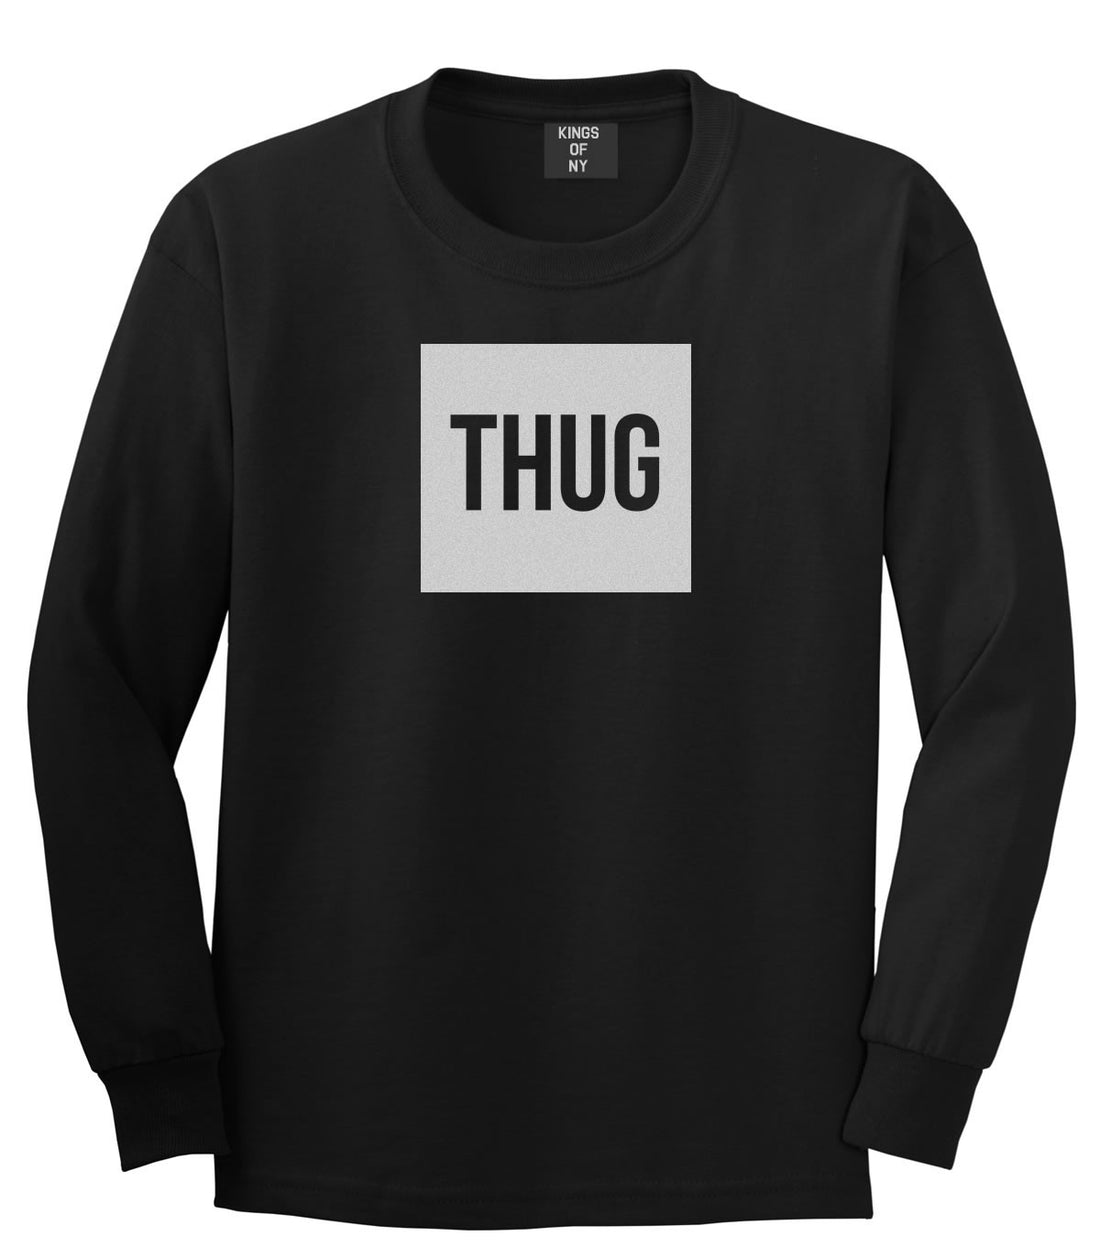 Thug Gangsta Box Logo Long Sleeve T-Shirt in Black by Kings Of NY